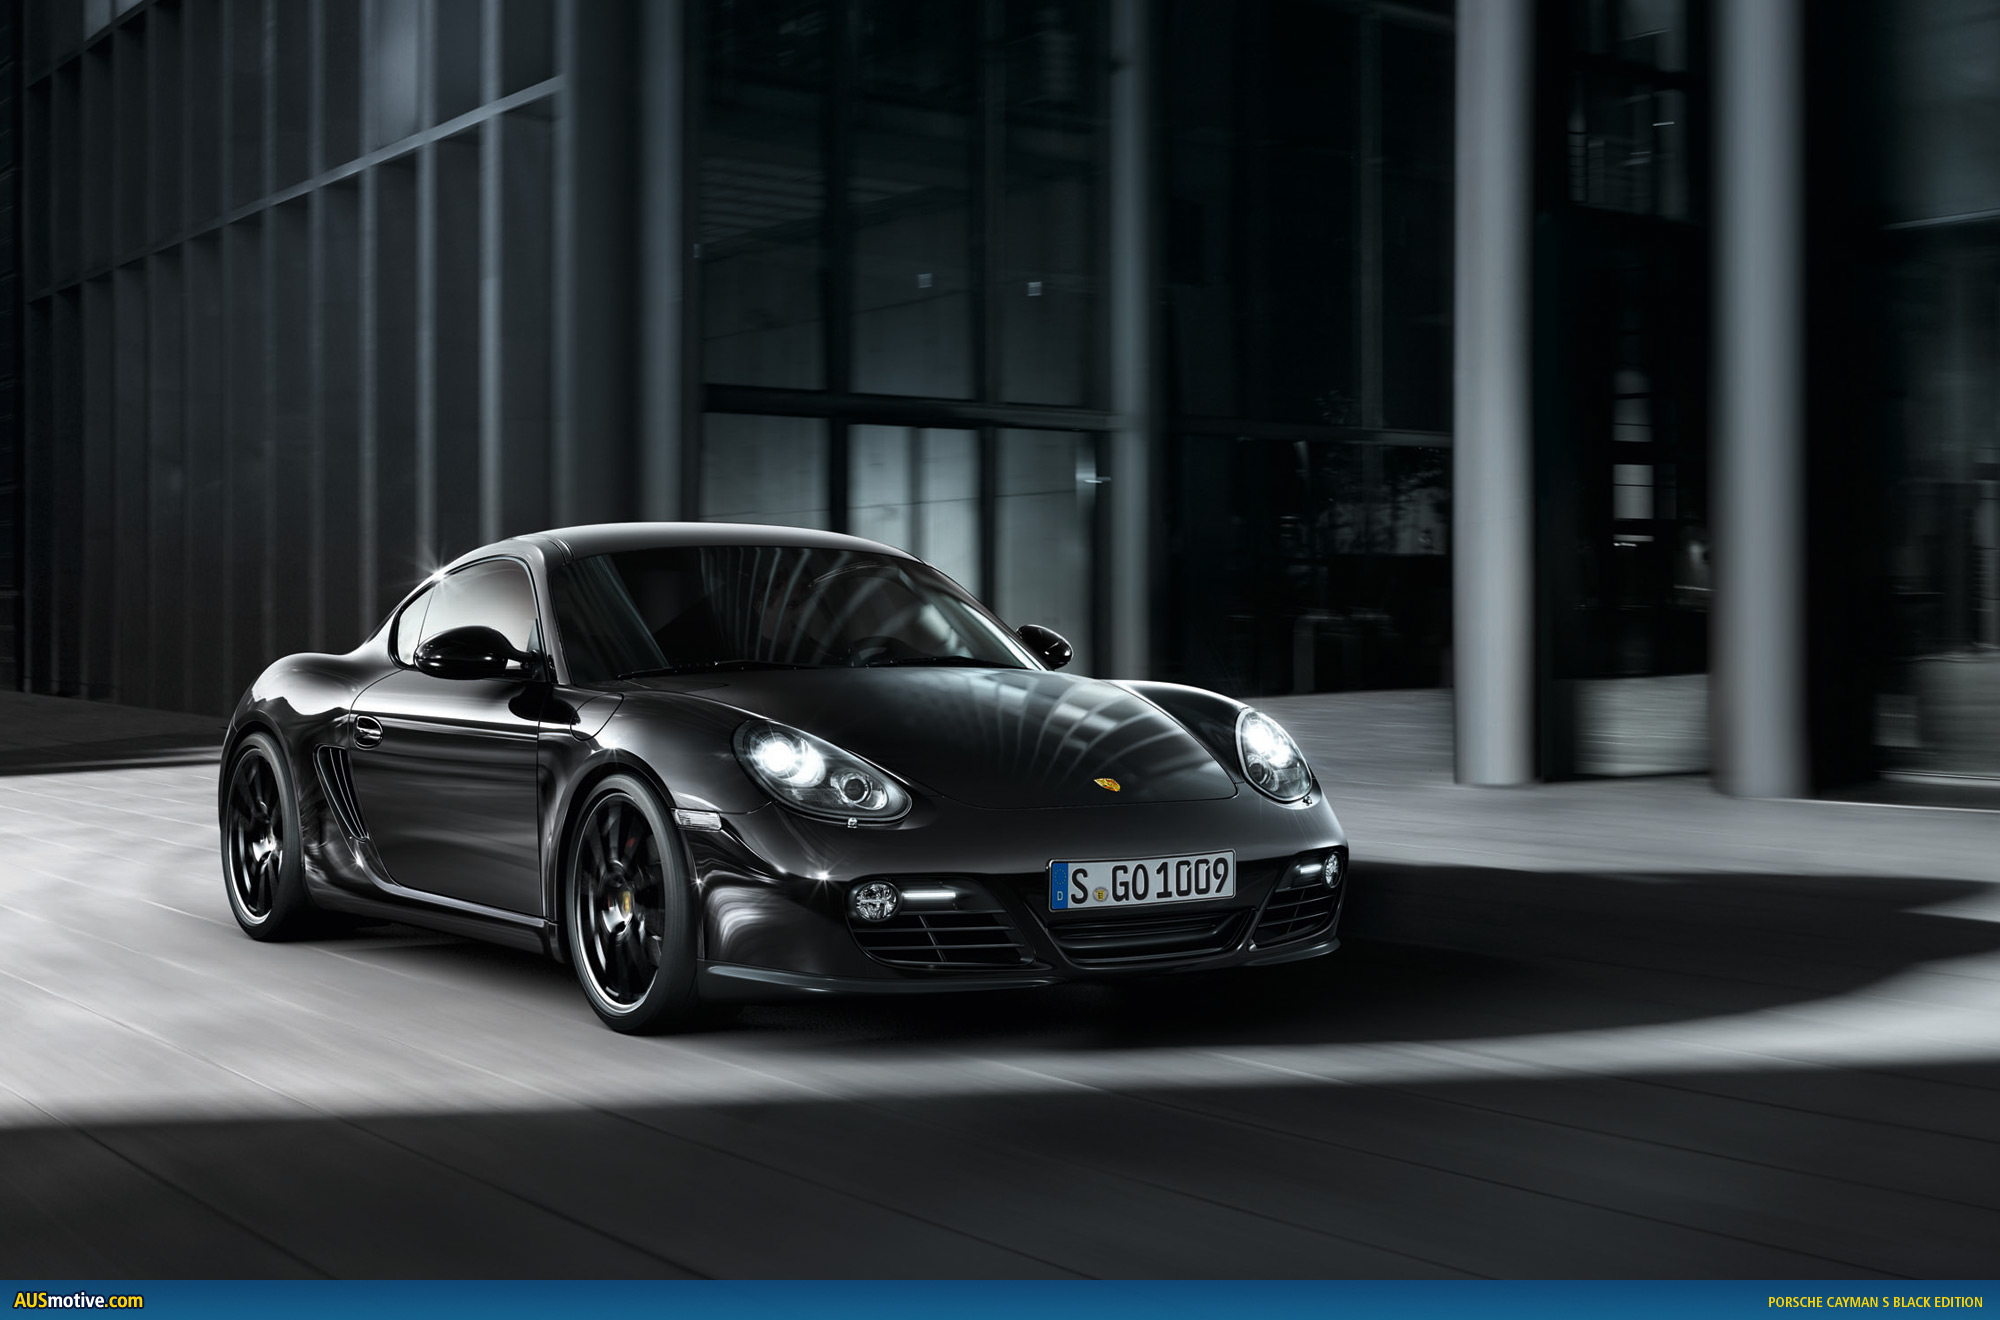 Porsche Cayman S Black Edition – AUSmotive.com